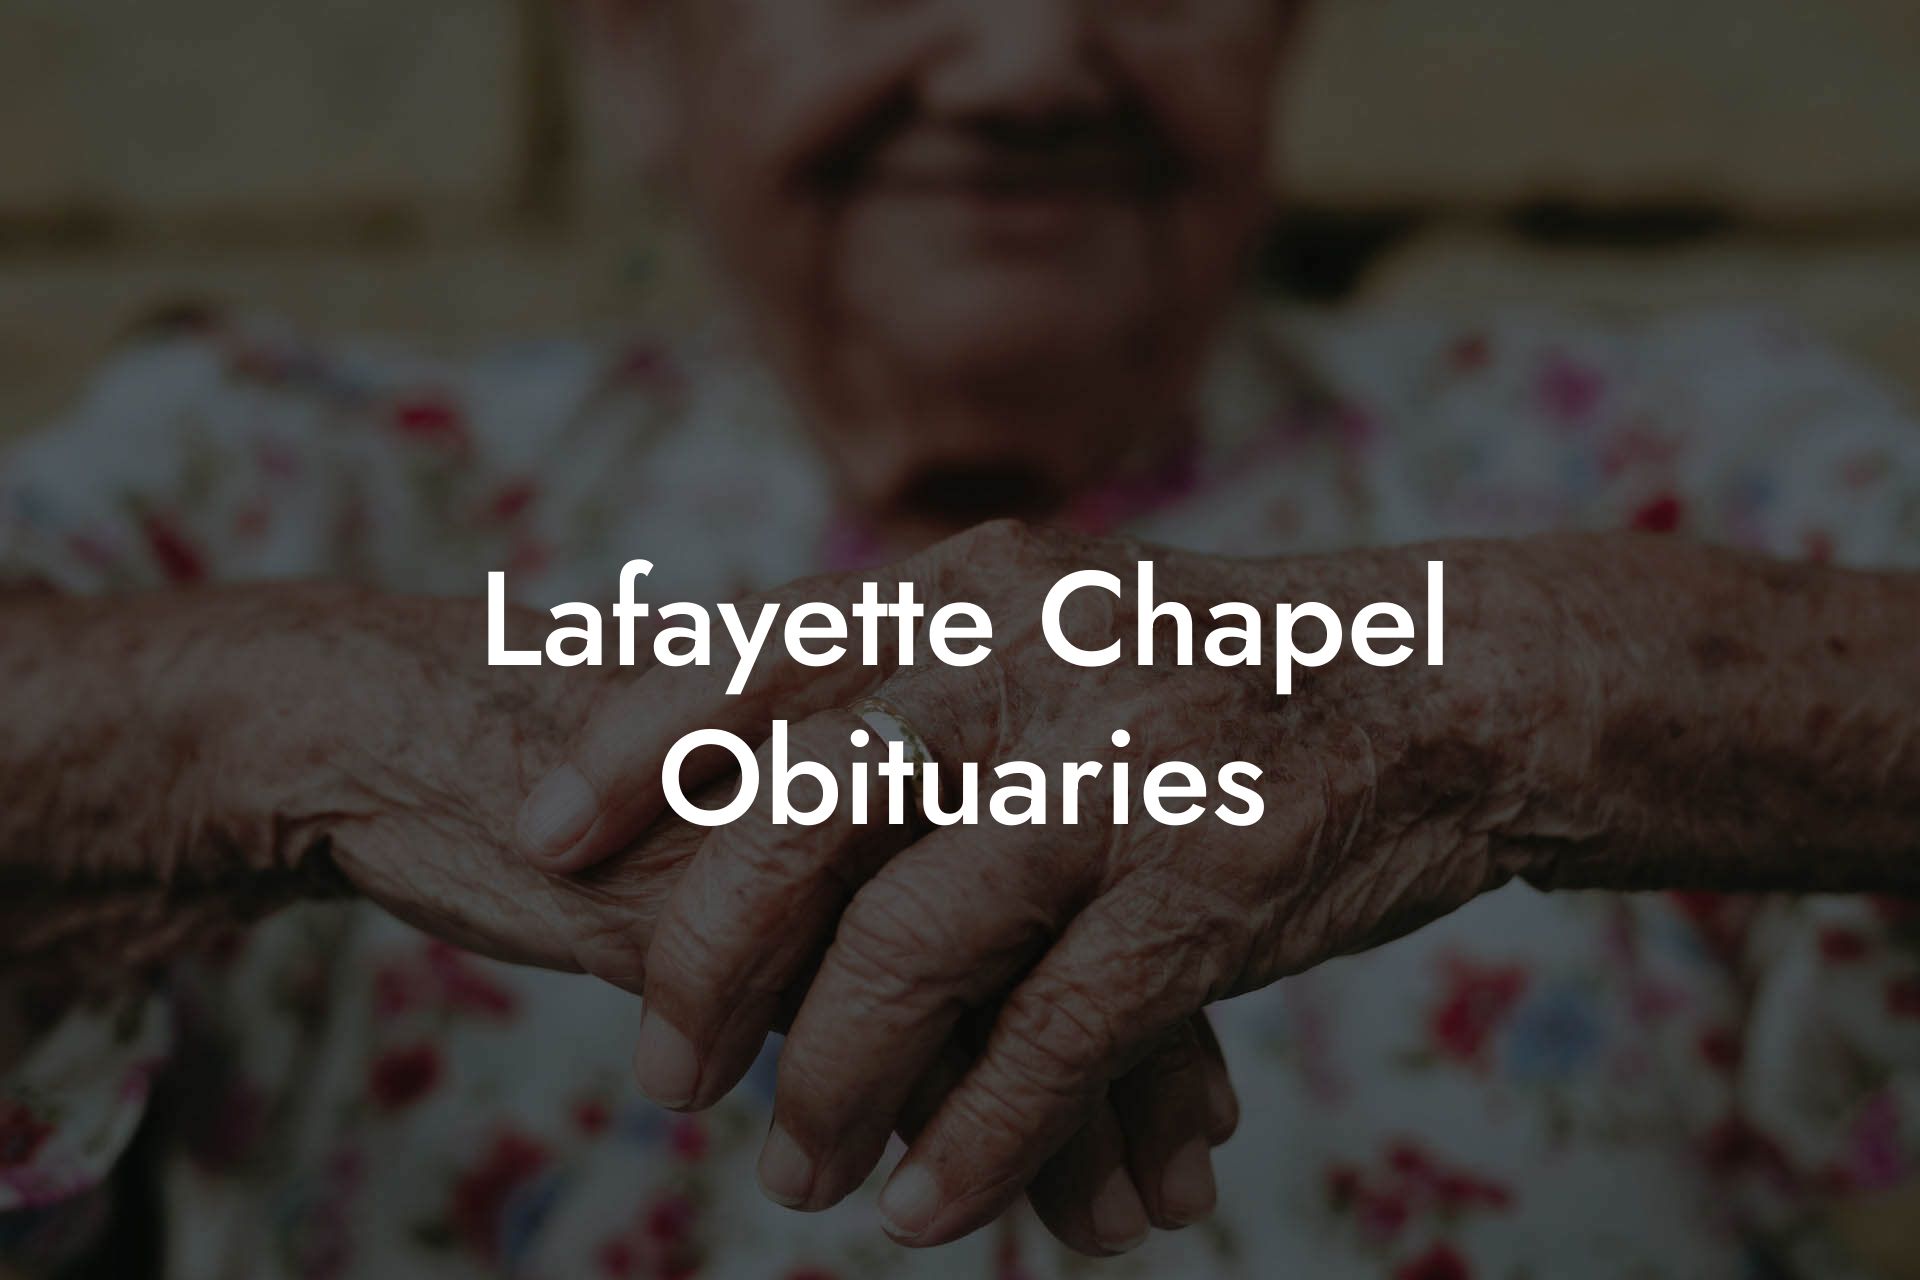 Lafayette Chapel Obituaries